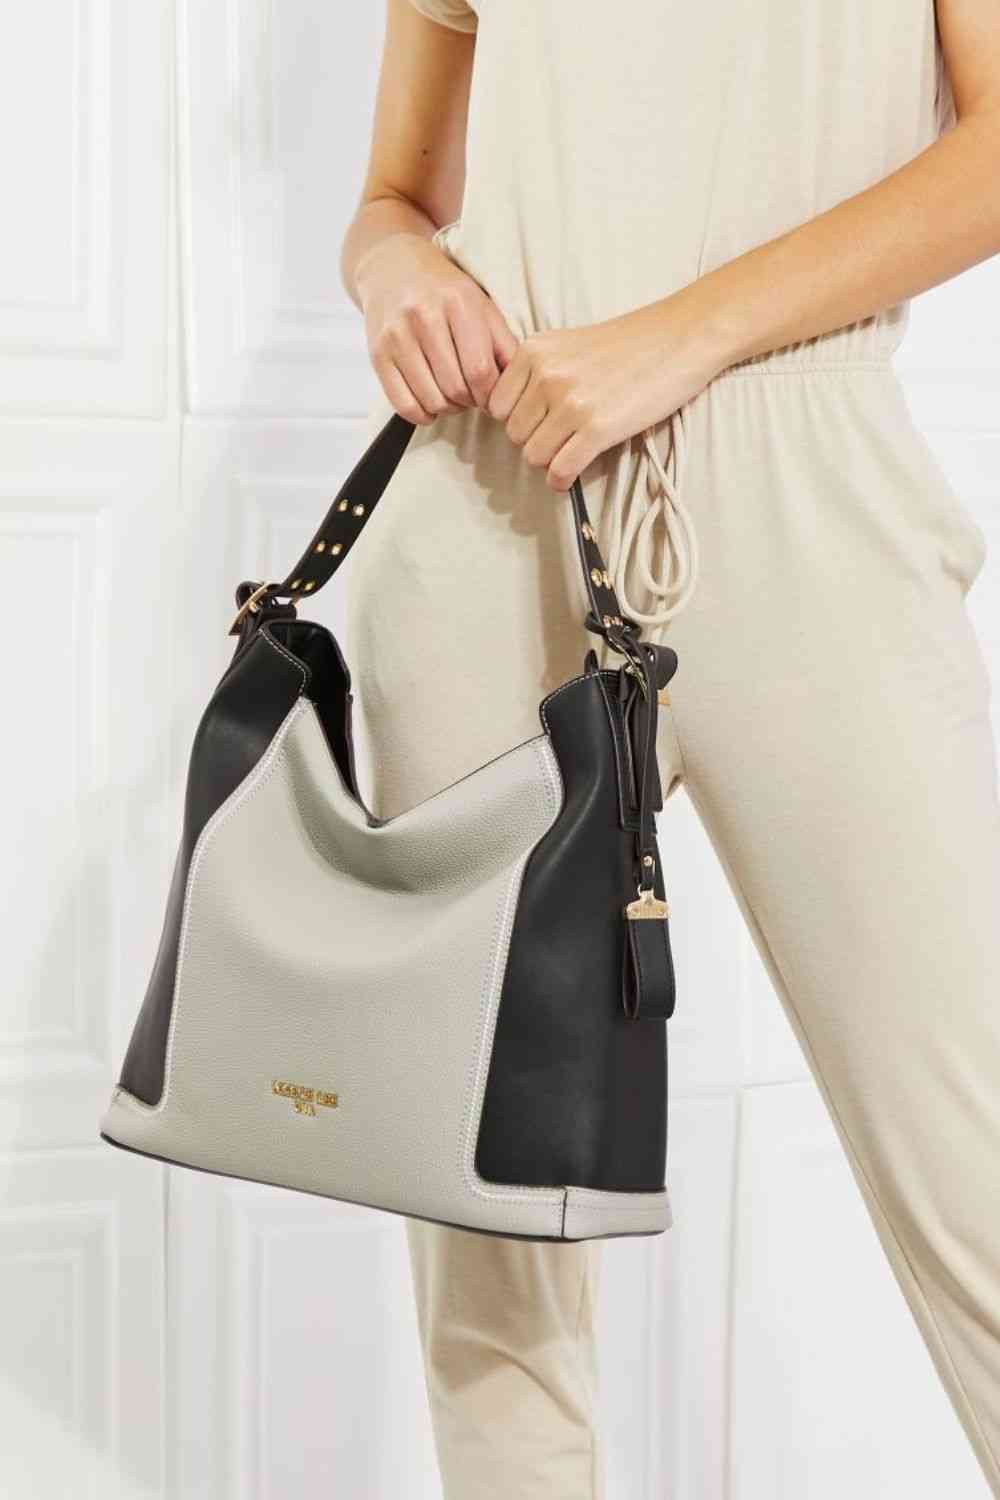 Light Gray Nicole Lee USA Make it Right Handbag Sentient Beauty Fashions *Accessories